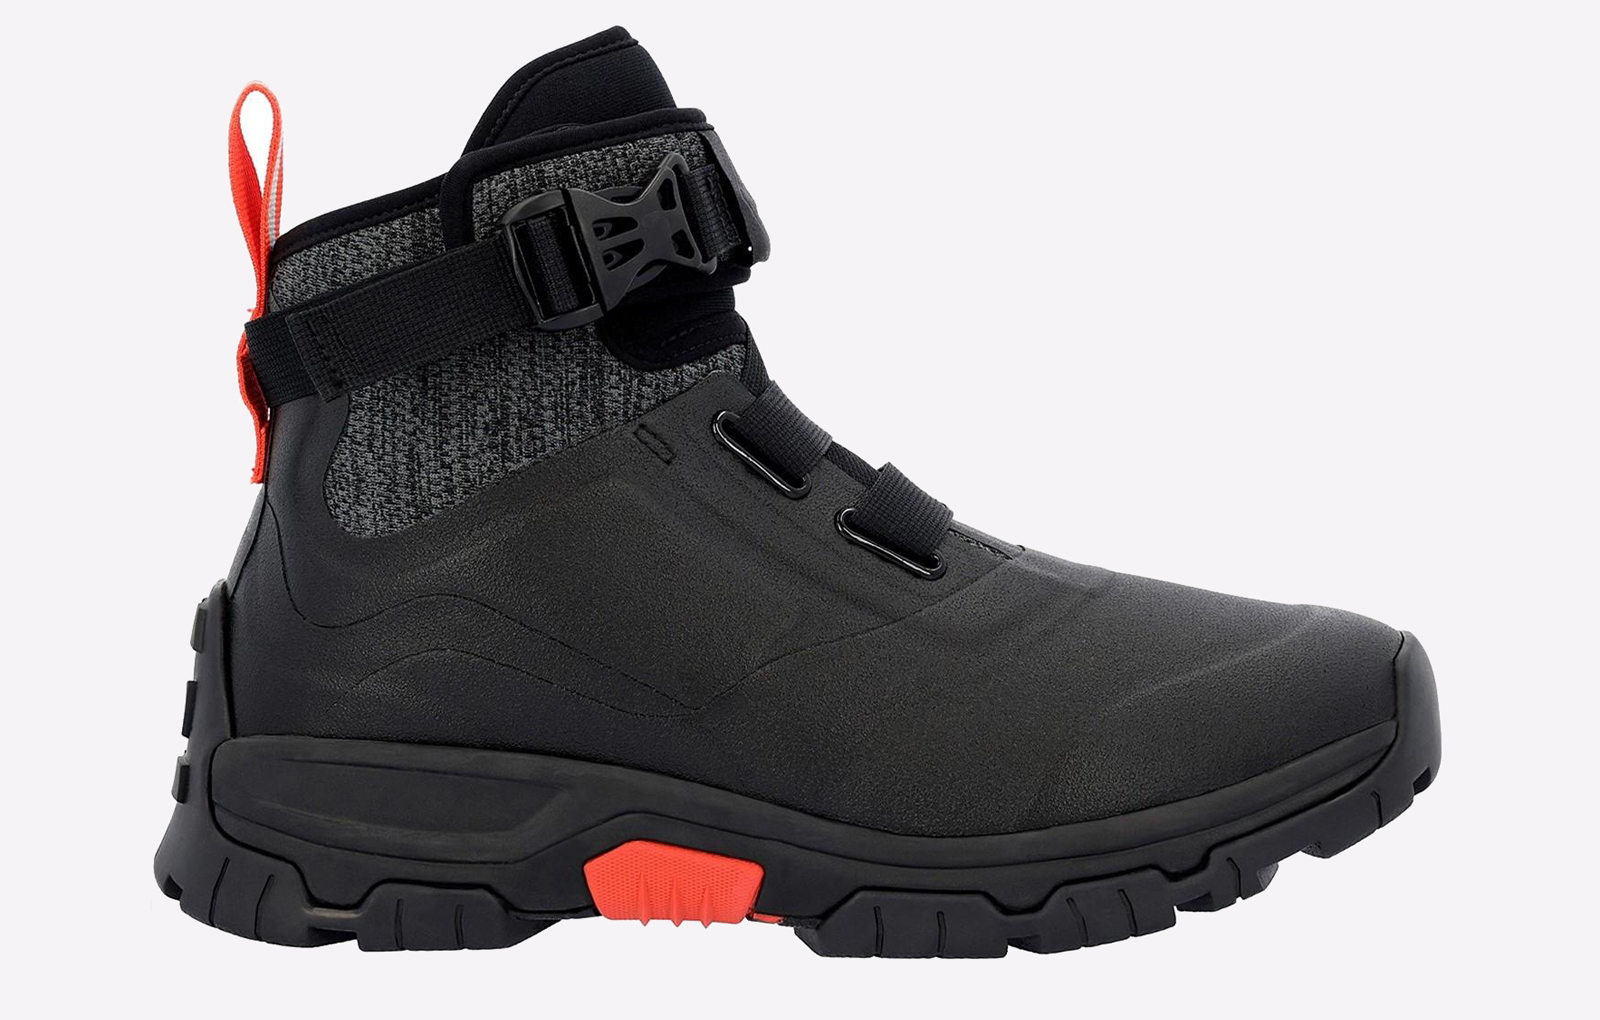 Muck Boots Apex Pac Mid Waterproof Mens  - GRD-35692-66613-12